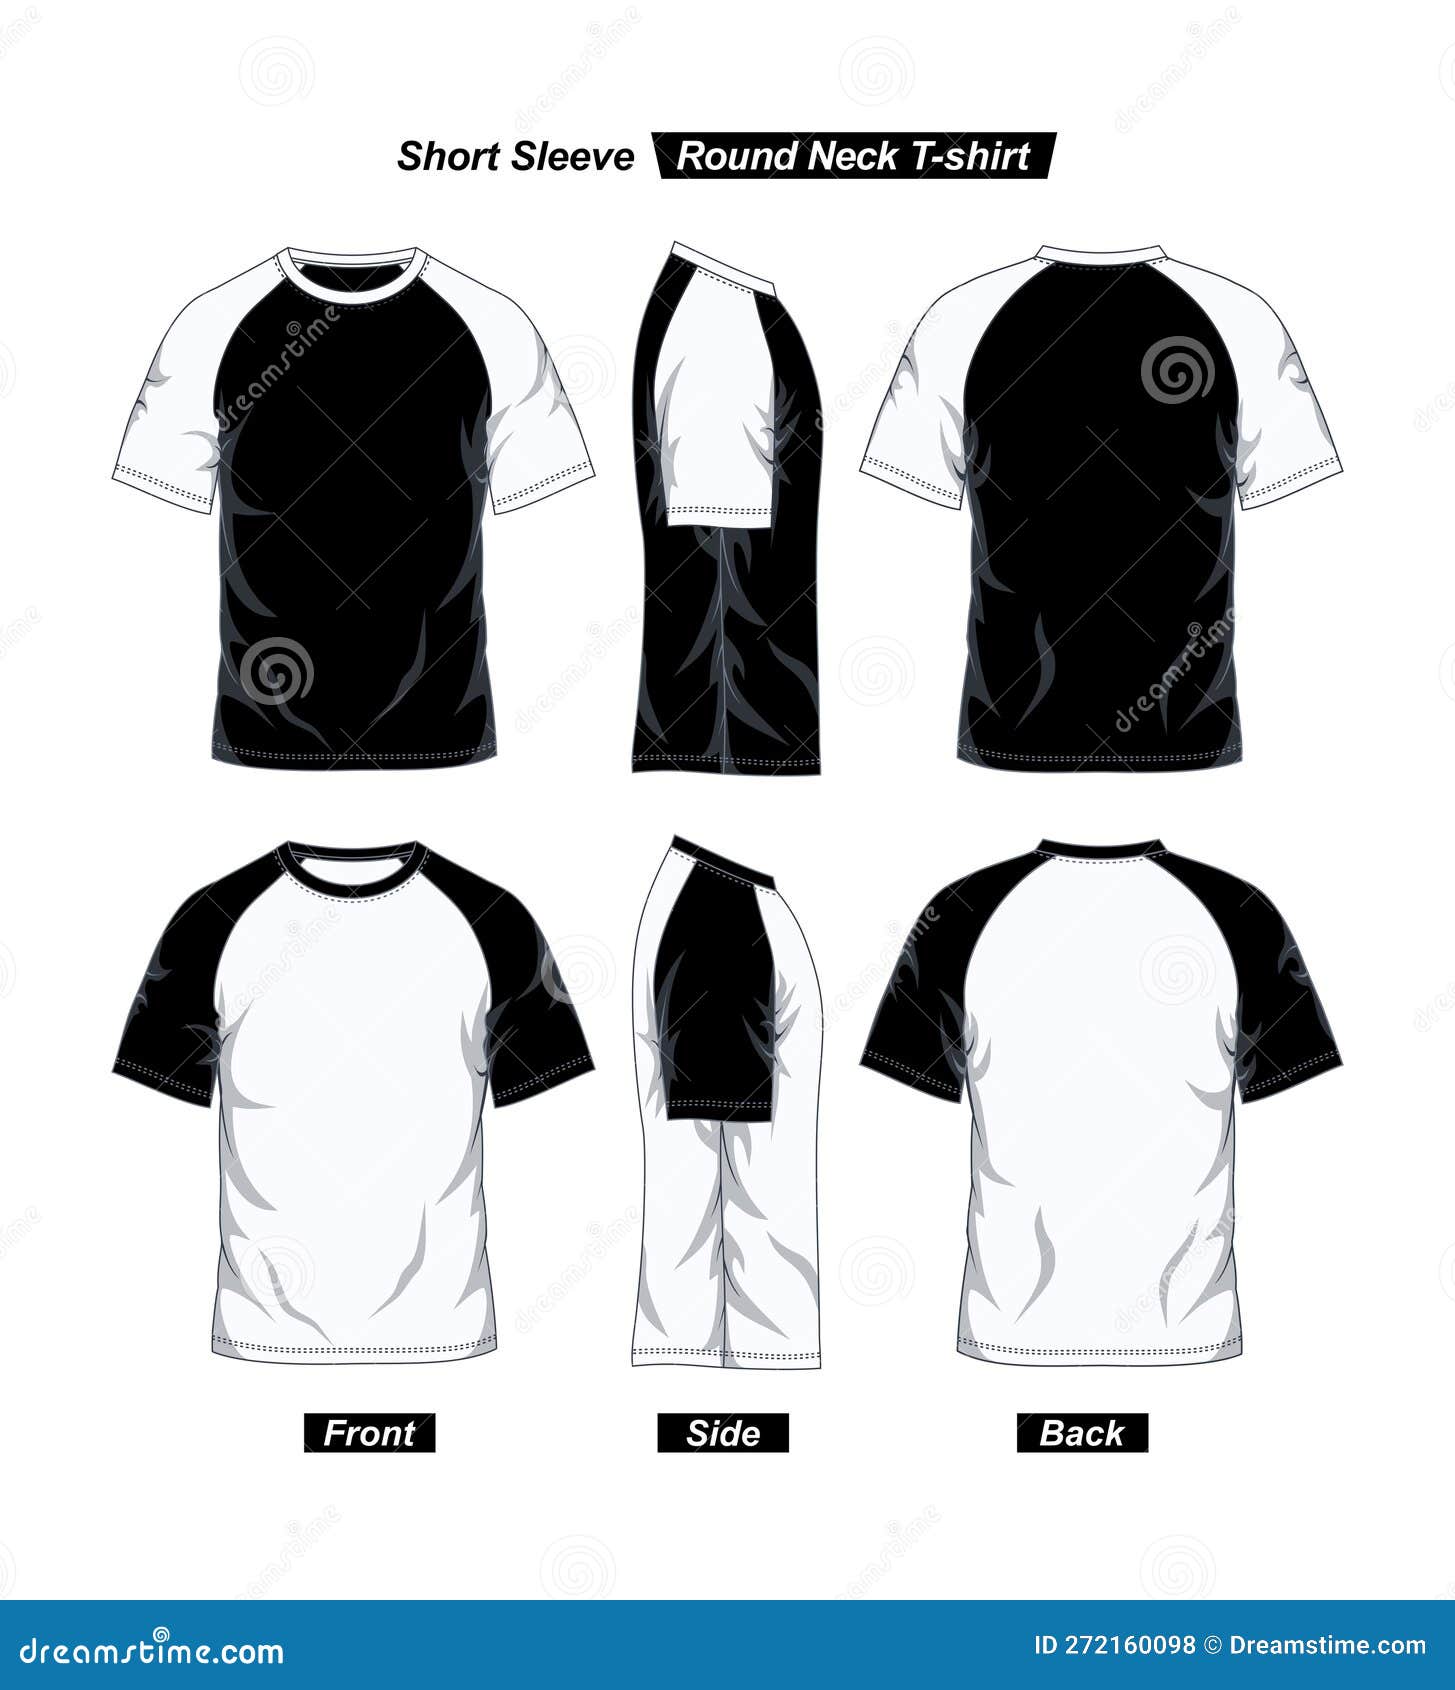 Raglan Round Neck T-Shirt Template, Short Sleeve, Black White, Front ...